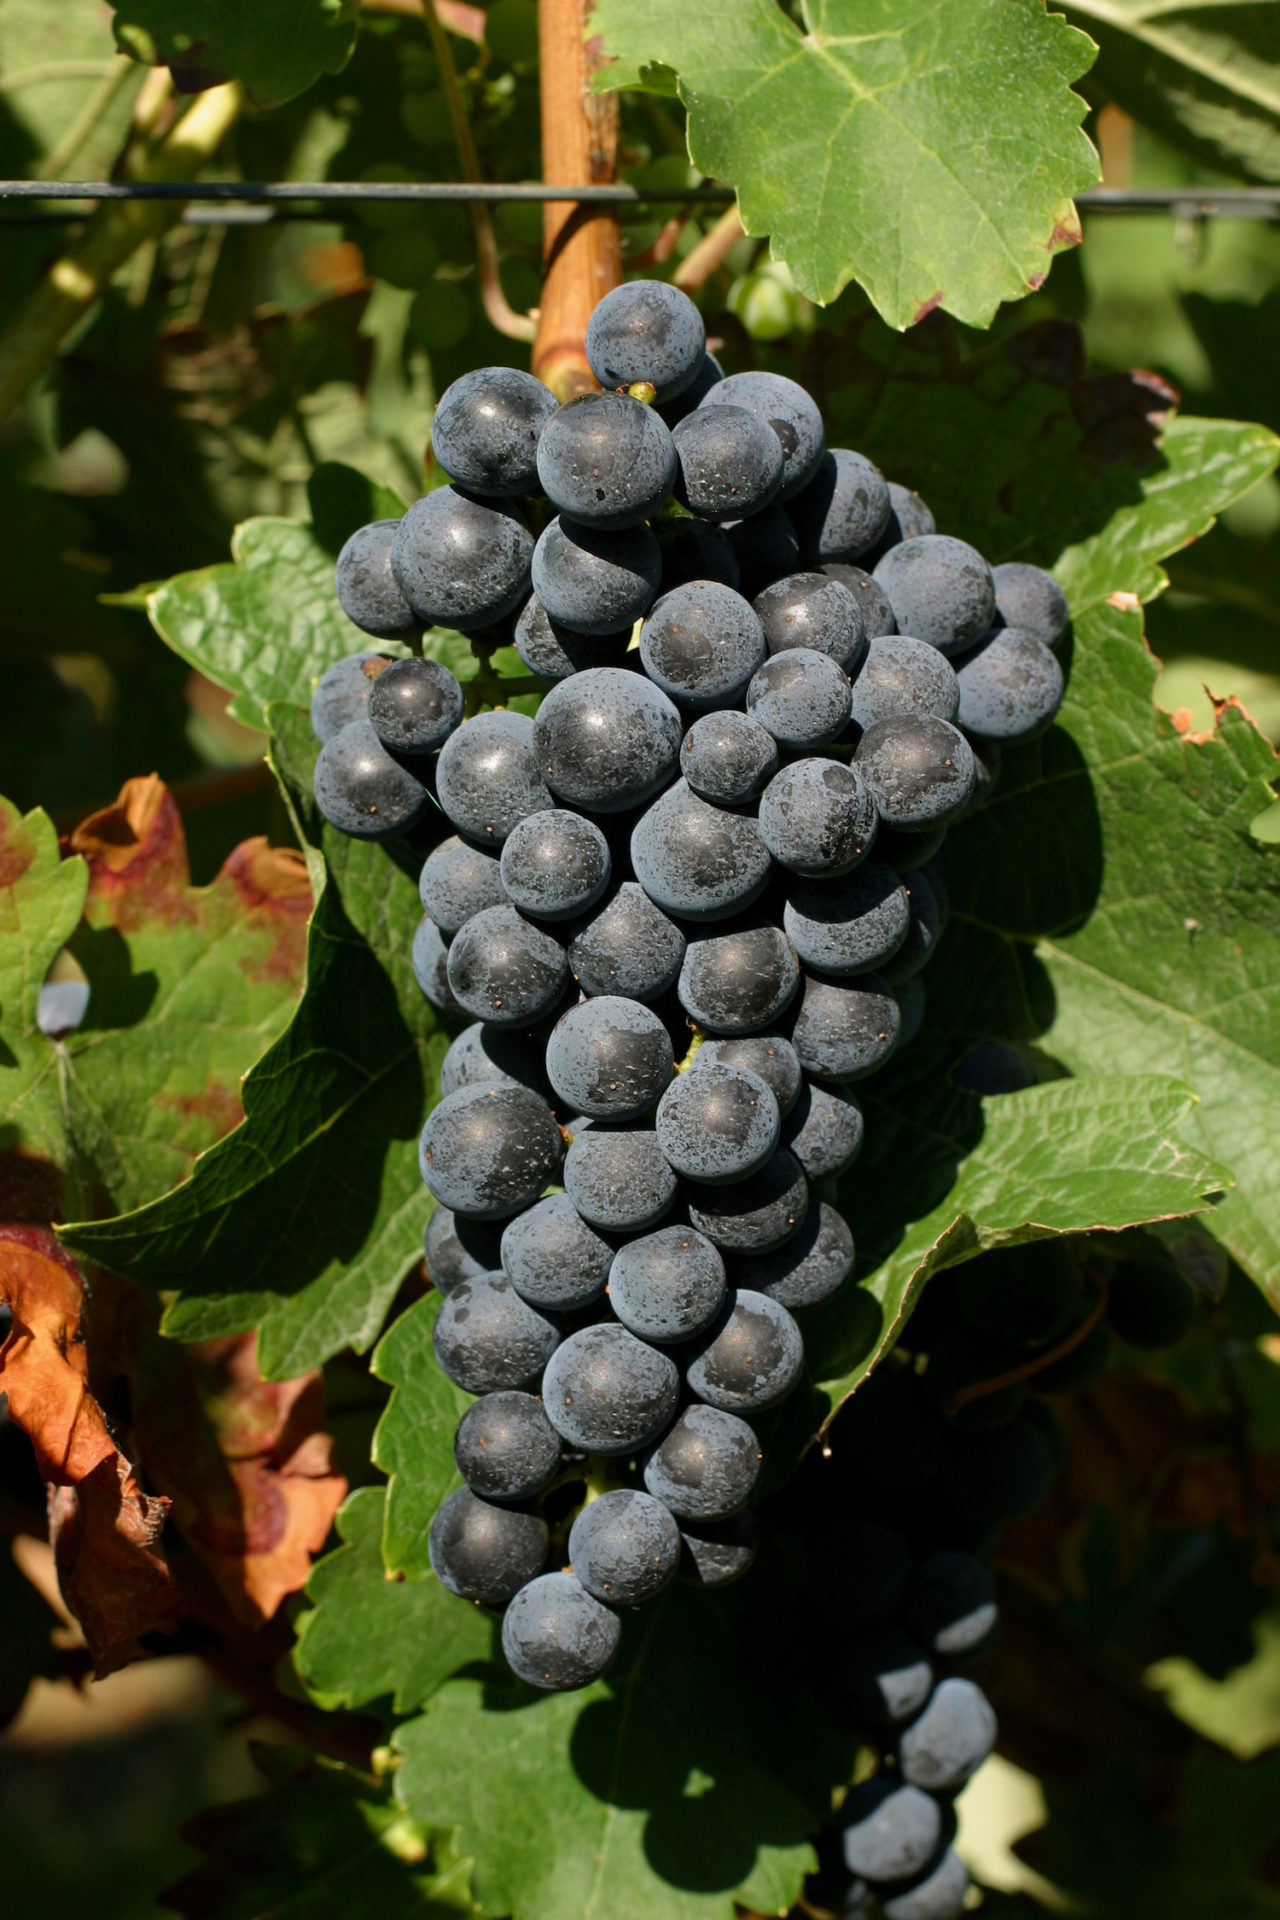 A ripe grape of the red wine variety Cabernet Sauvignon